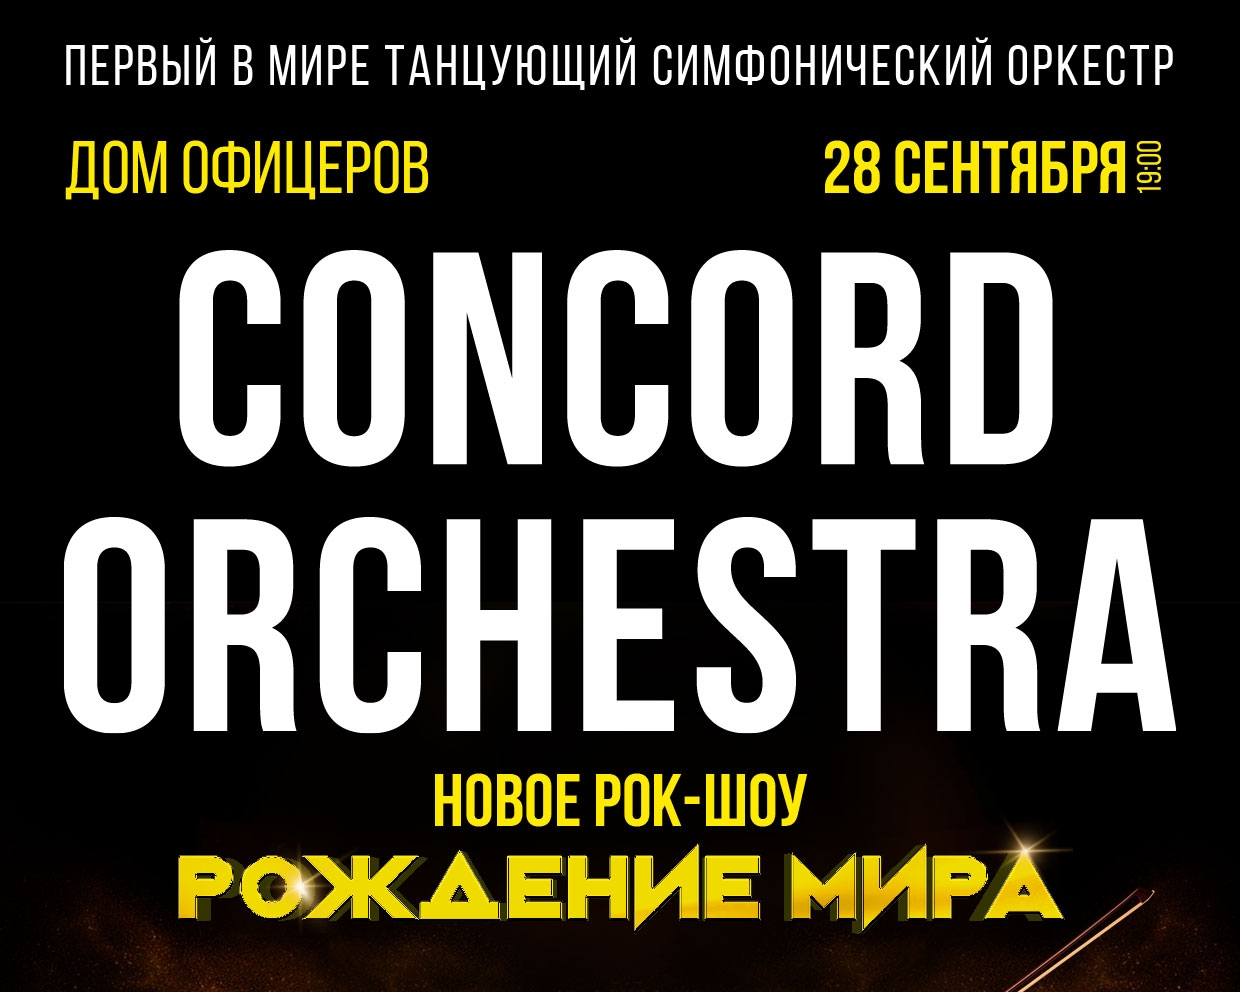 Concord orchestra отзывы